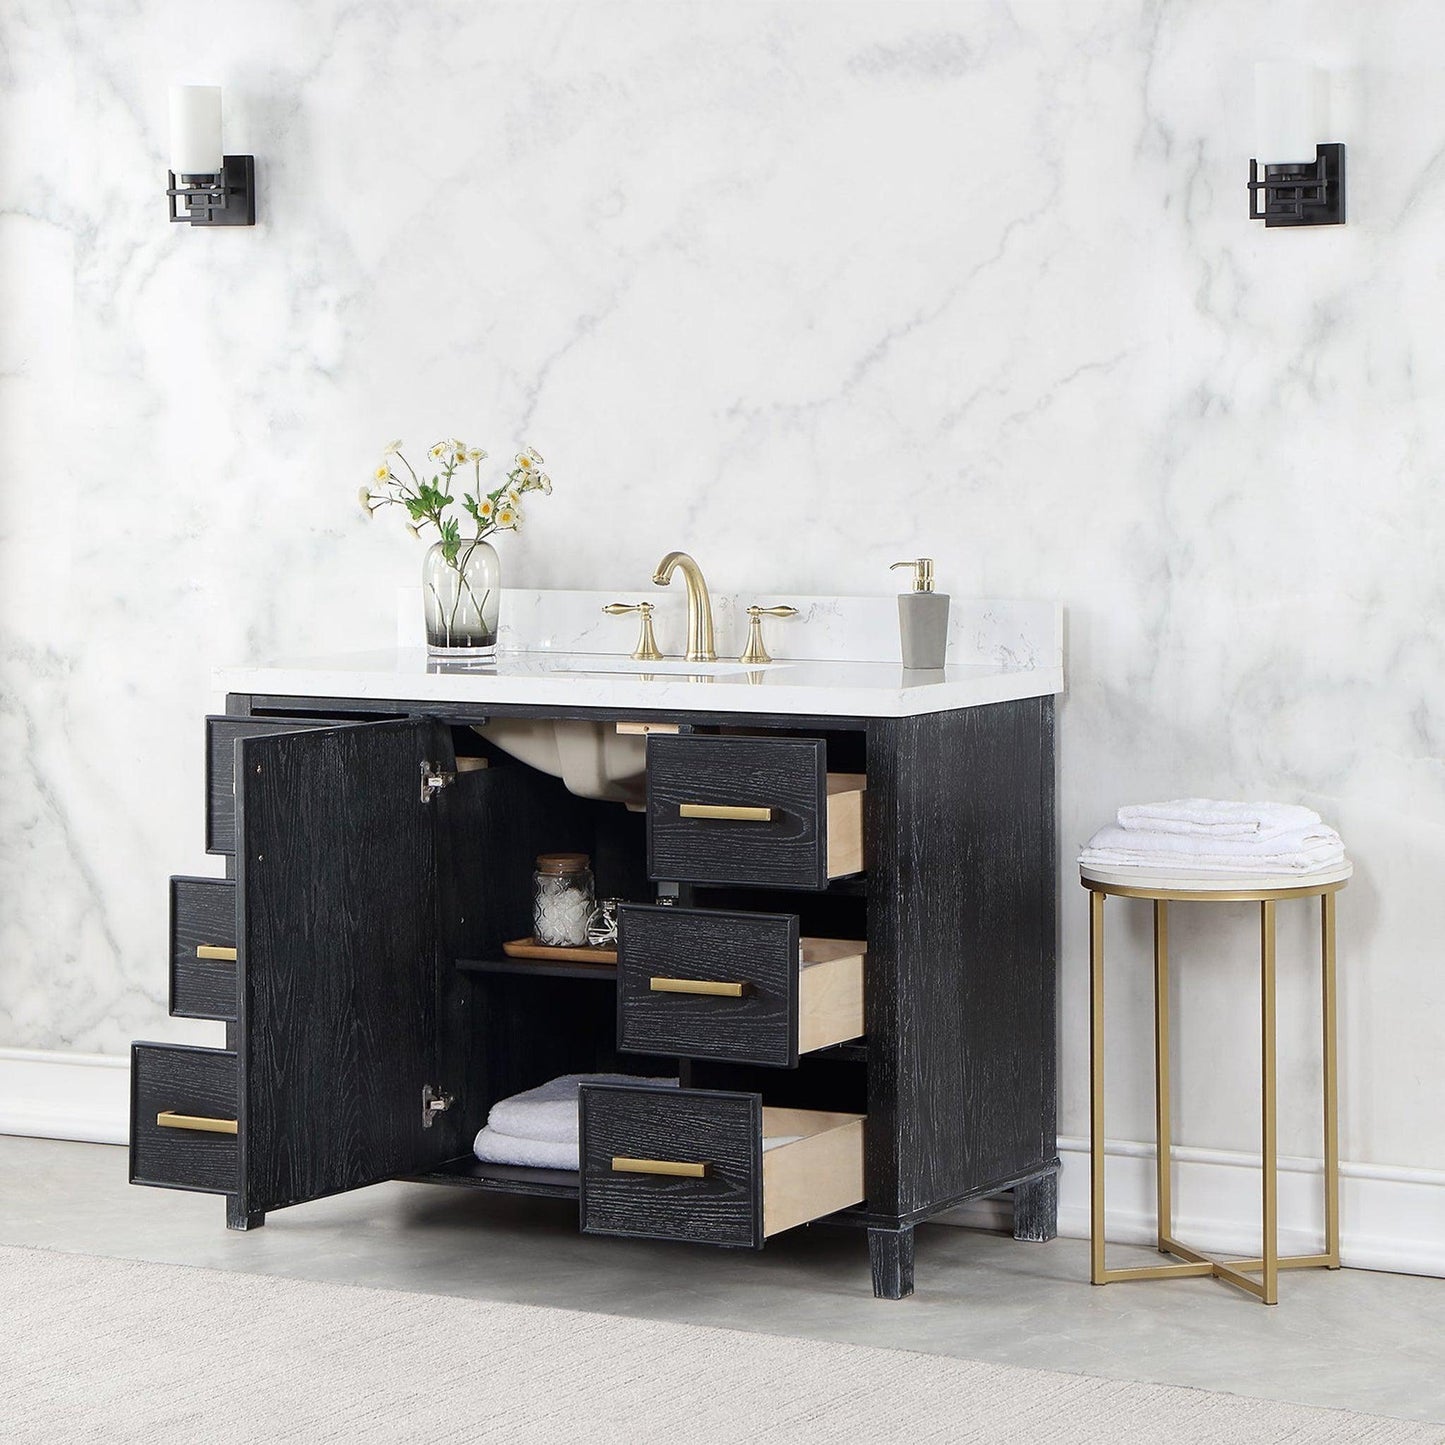 Altair Weiser 48" Black Oak Freestanding Single Bathroom Vanity Set With Aosta White Composite Stone Top, Single Rectangular Undermount Ceramic Sink, Overflow, and Backsplash